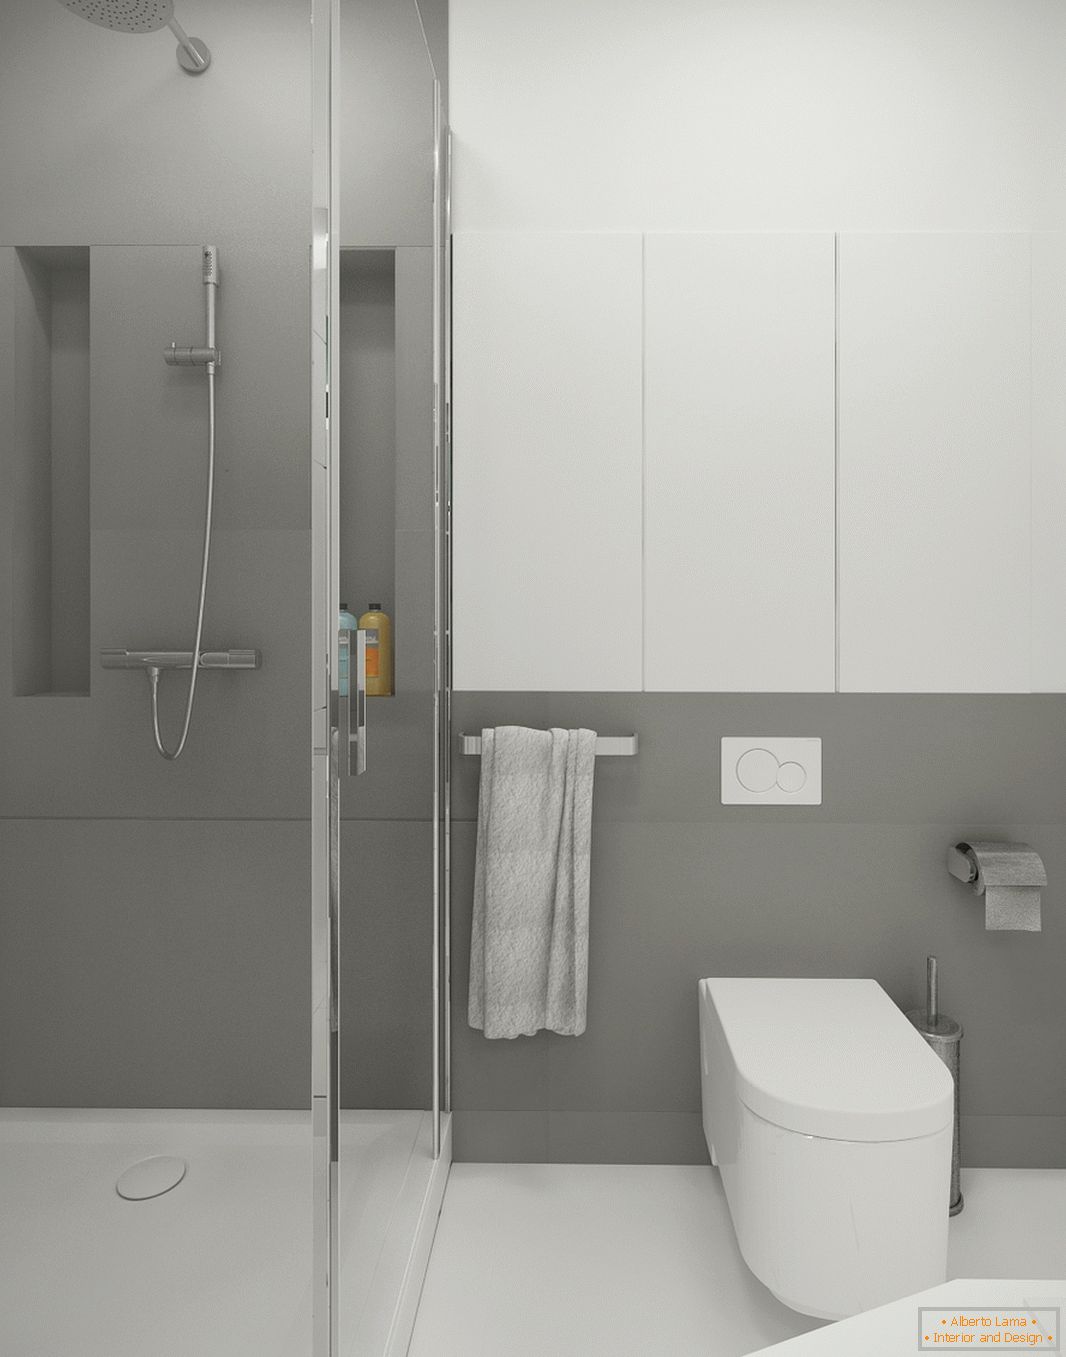 Bathroom in white-gray color